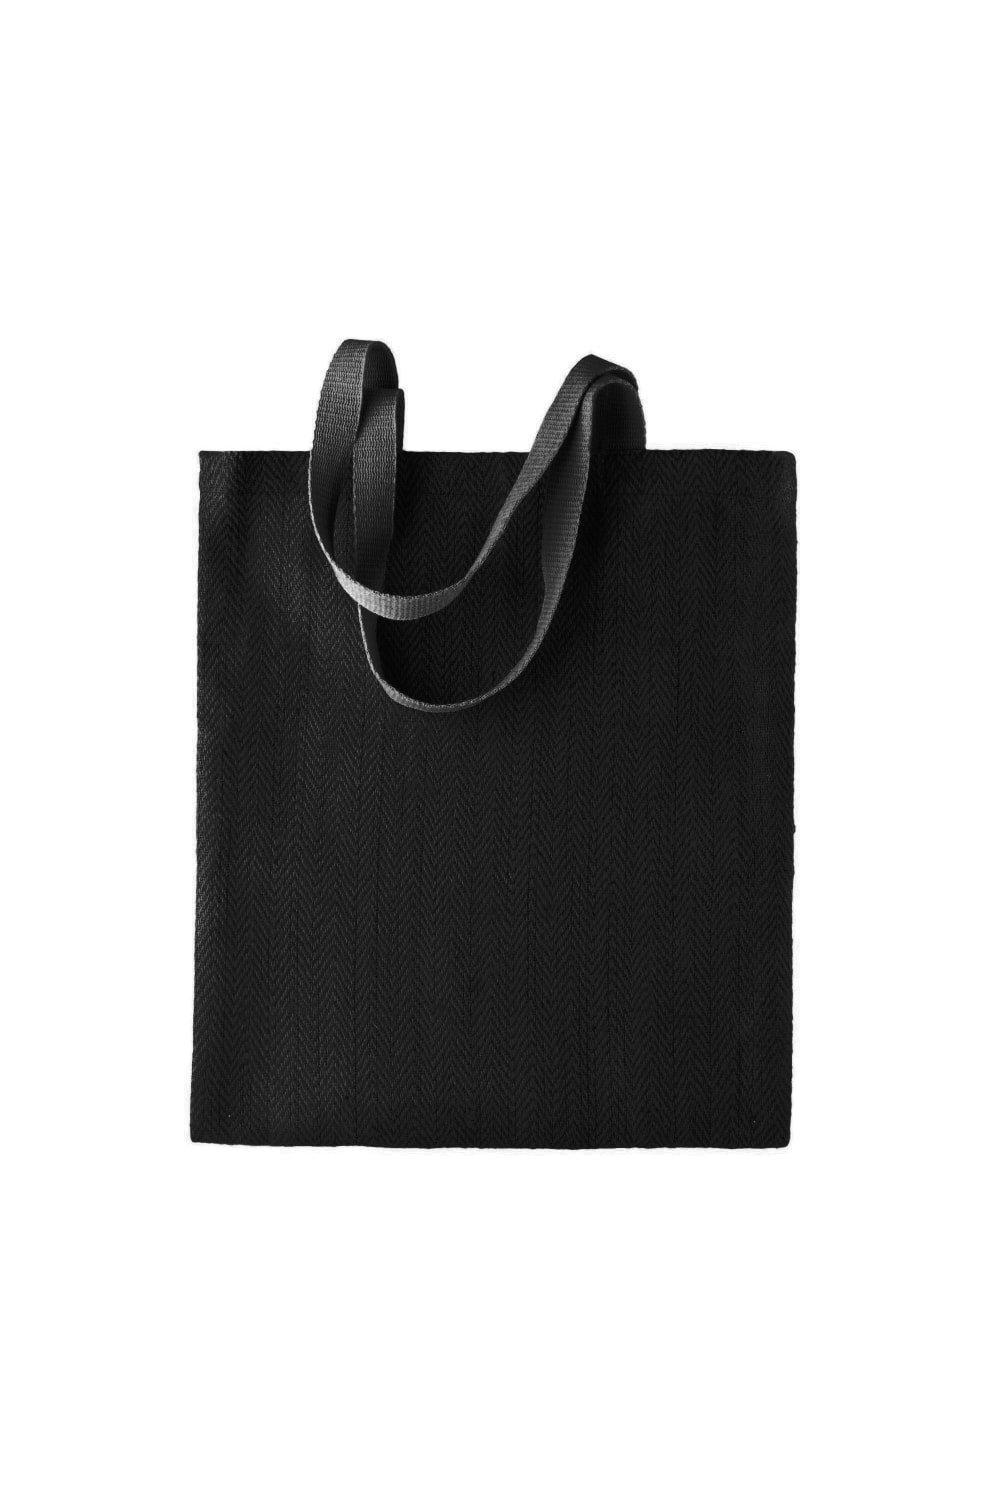 цена Джутовая сумка с рисунком (2 шт.) Kimood, черный